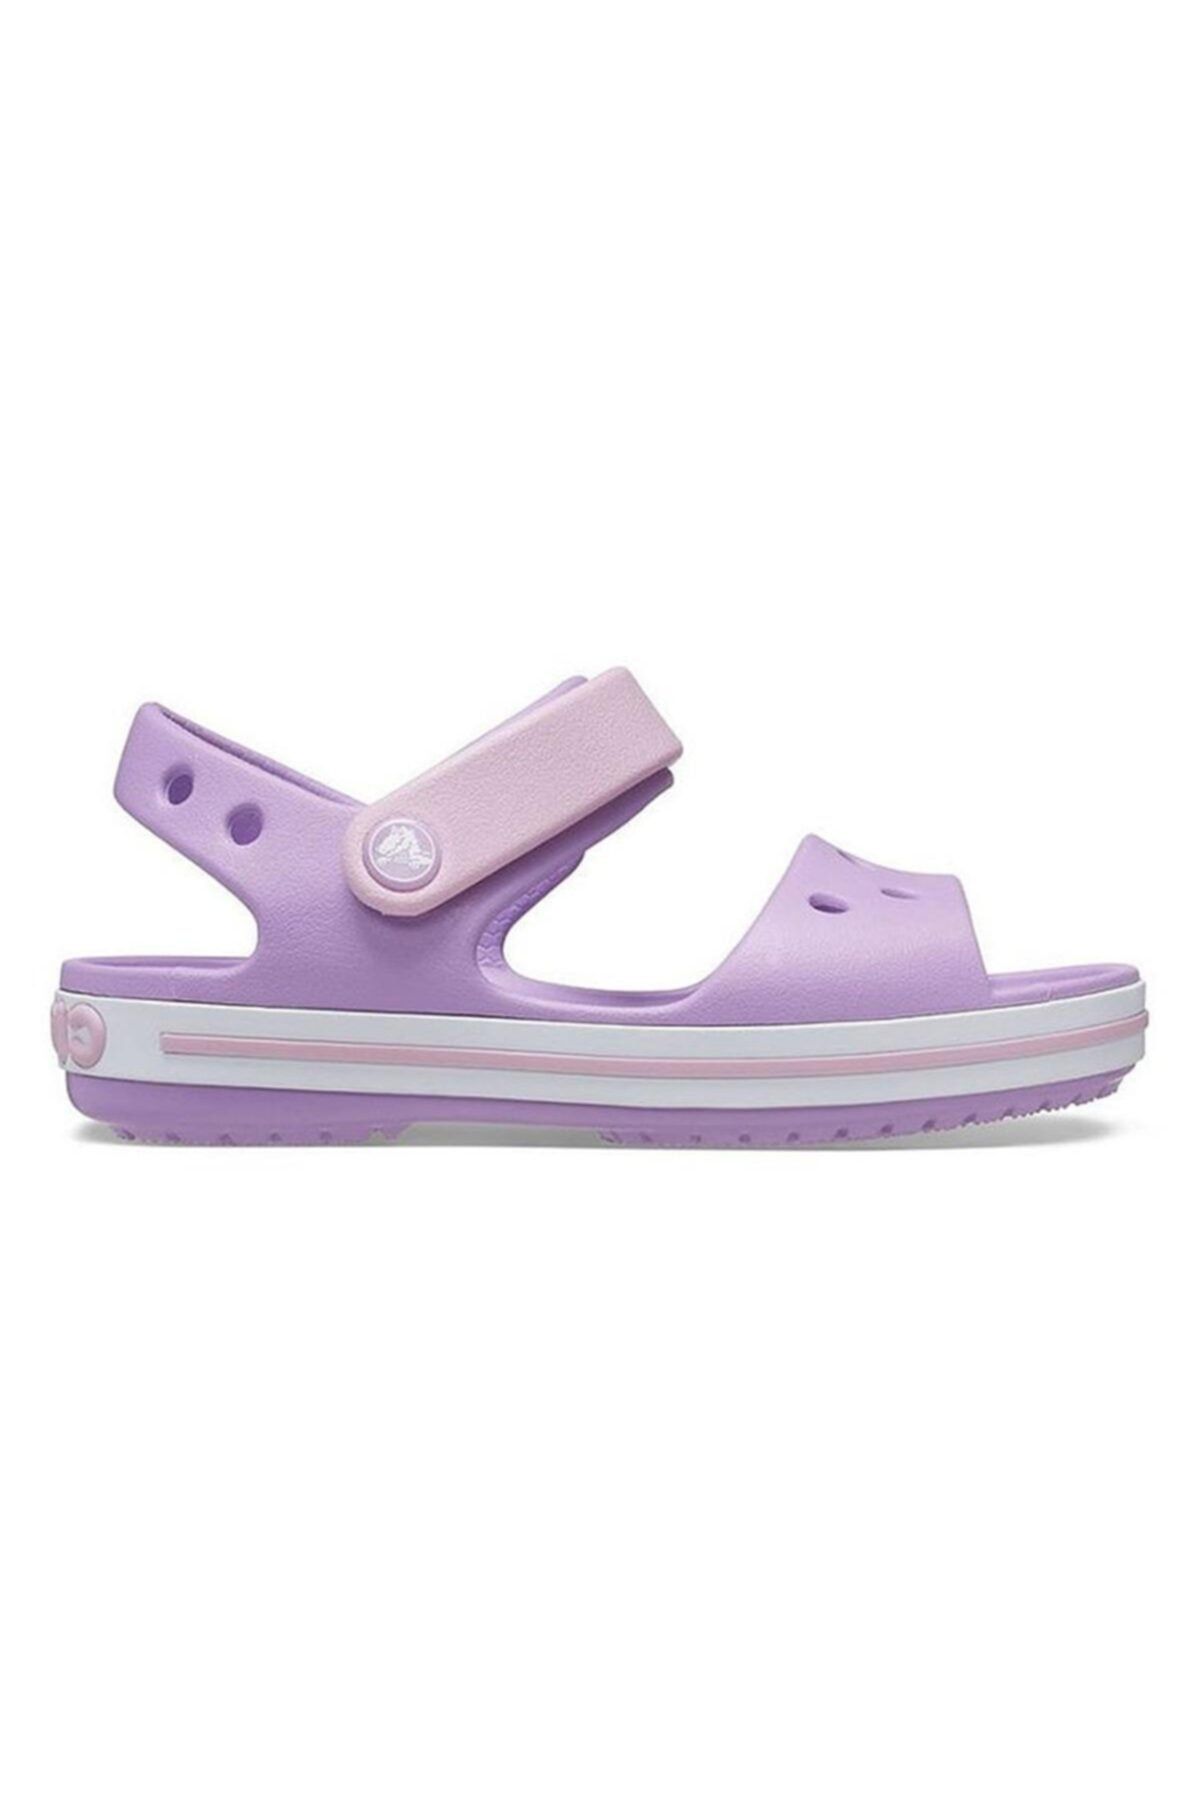 Crocs Crocband Sandal Kids Cr1162-5pr